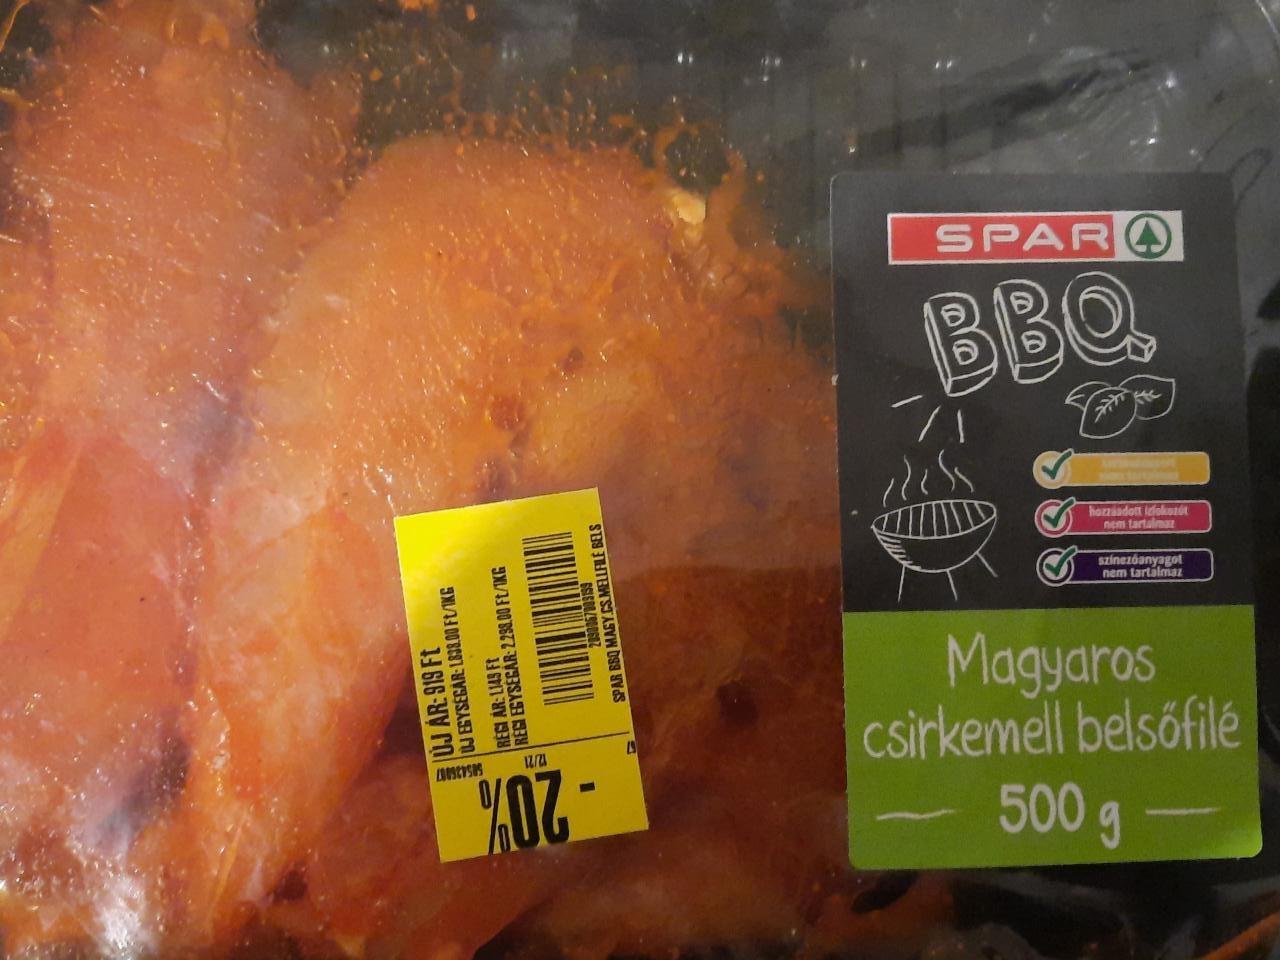 Képek - BBQ magyaros csirkemell belsőfilé Spar